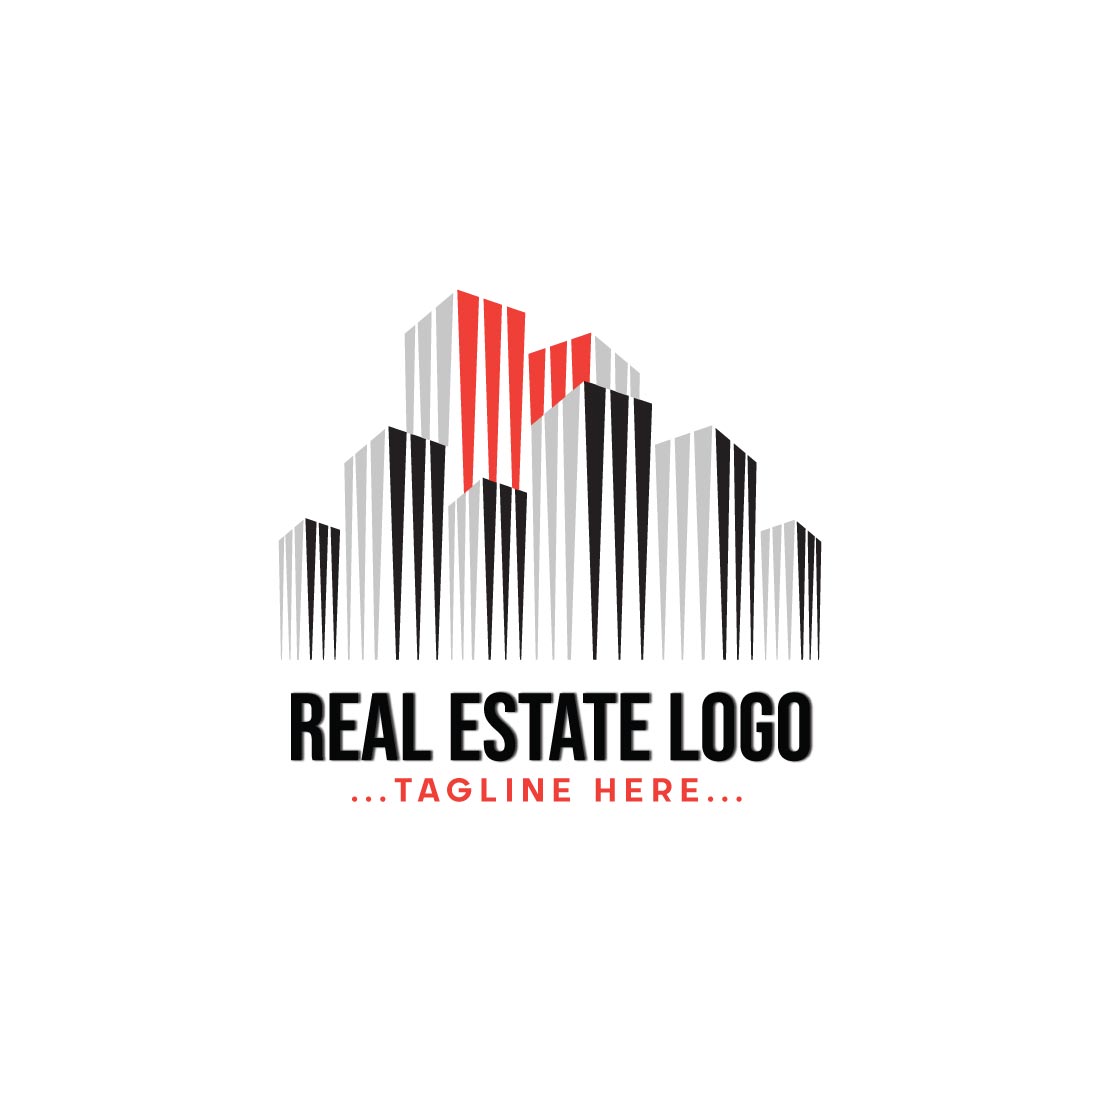 Stylish Engineer Real Estate Logo cover image.